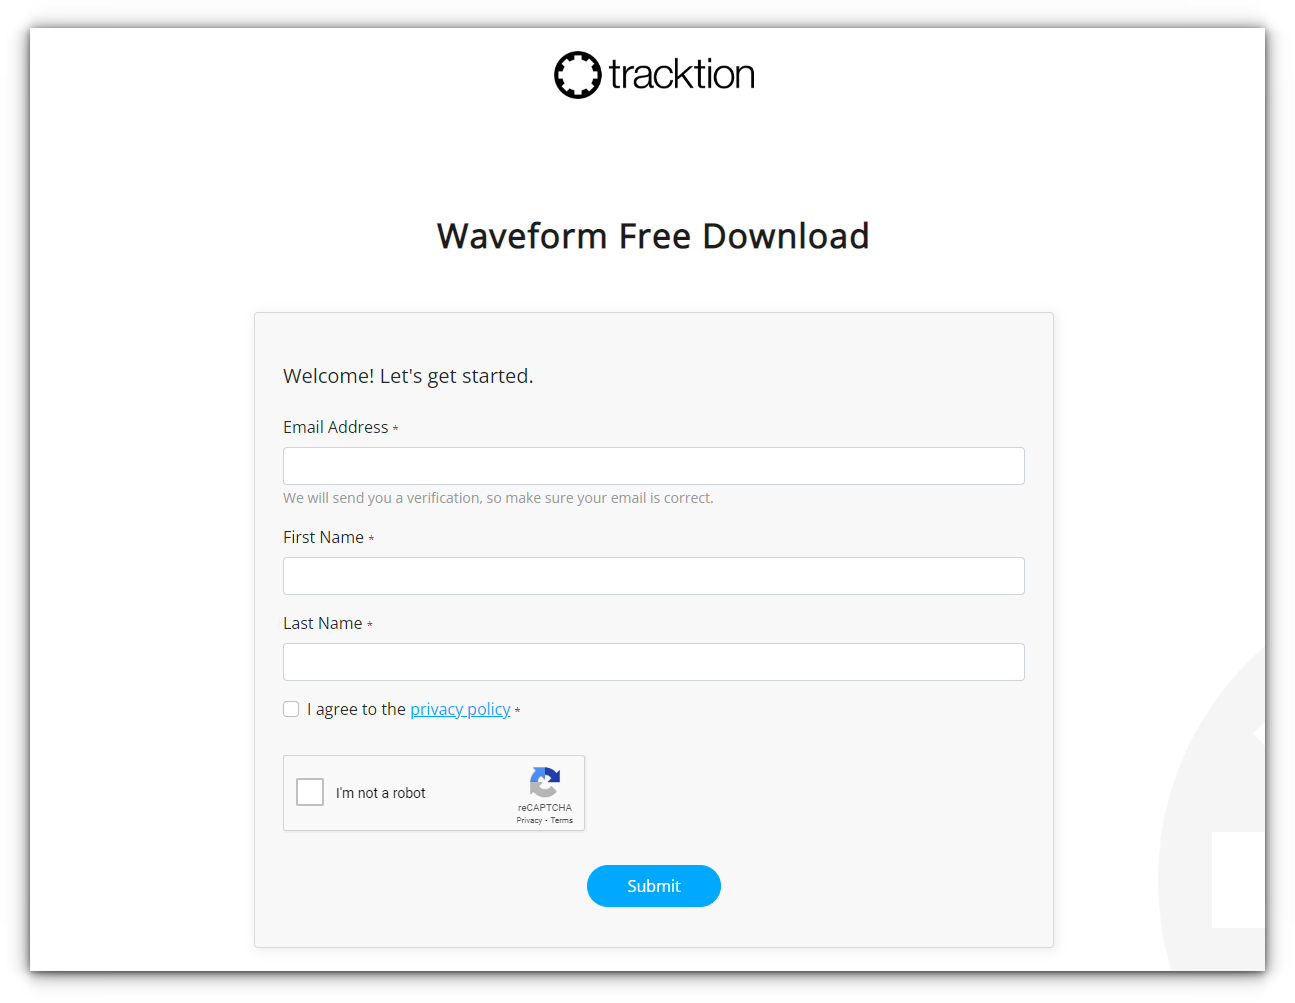 tracktion waveform free download by providing user details